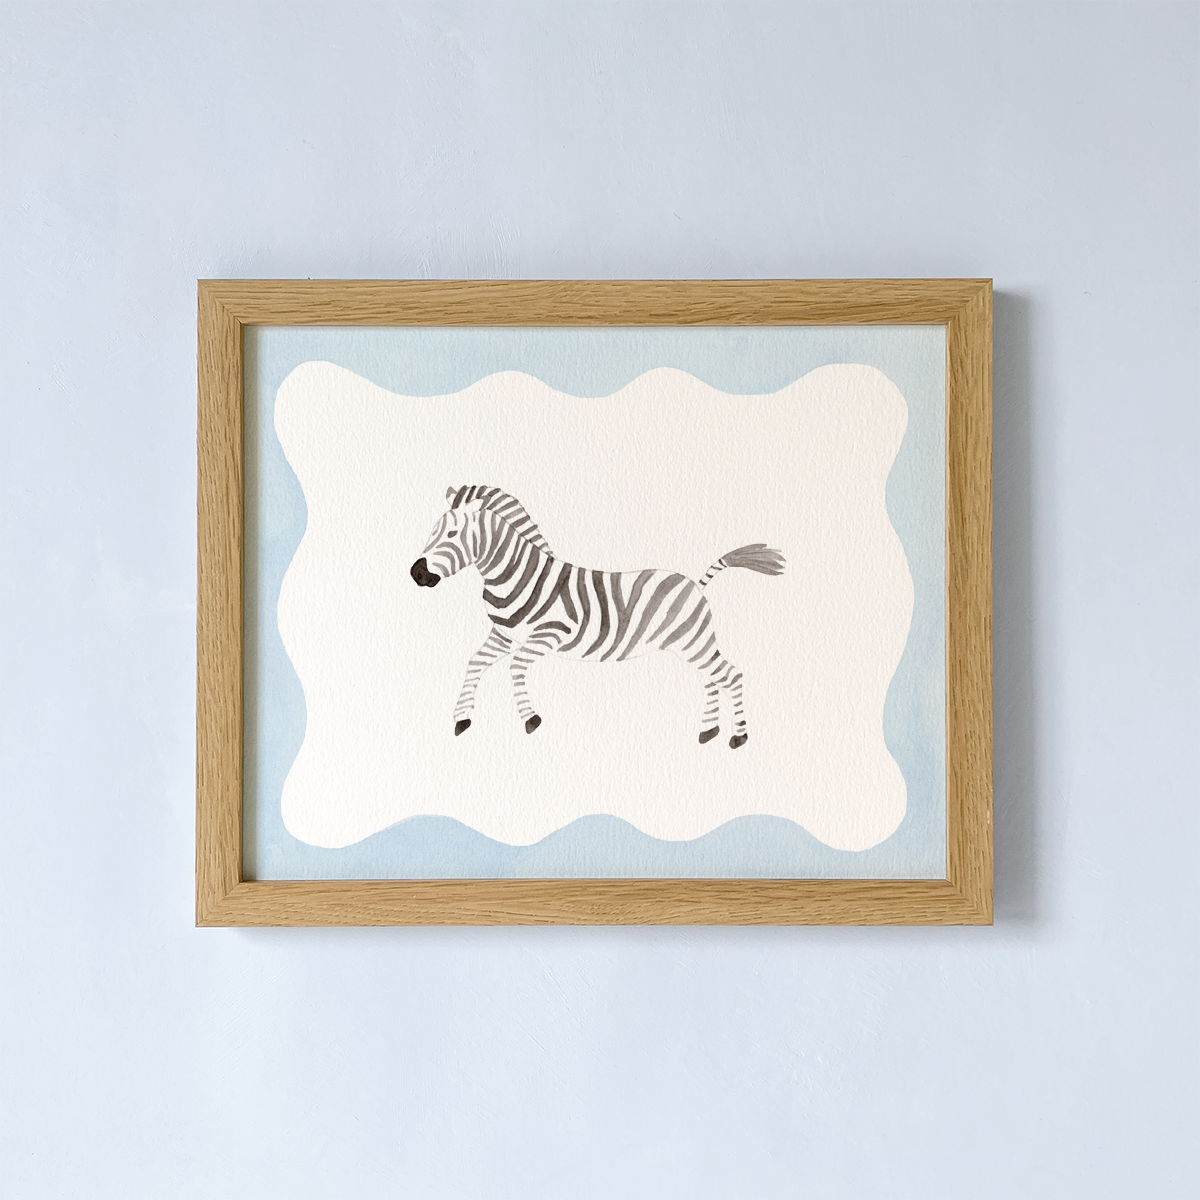 art print with zebra